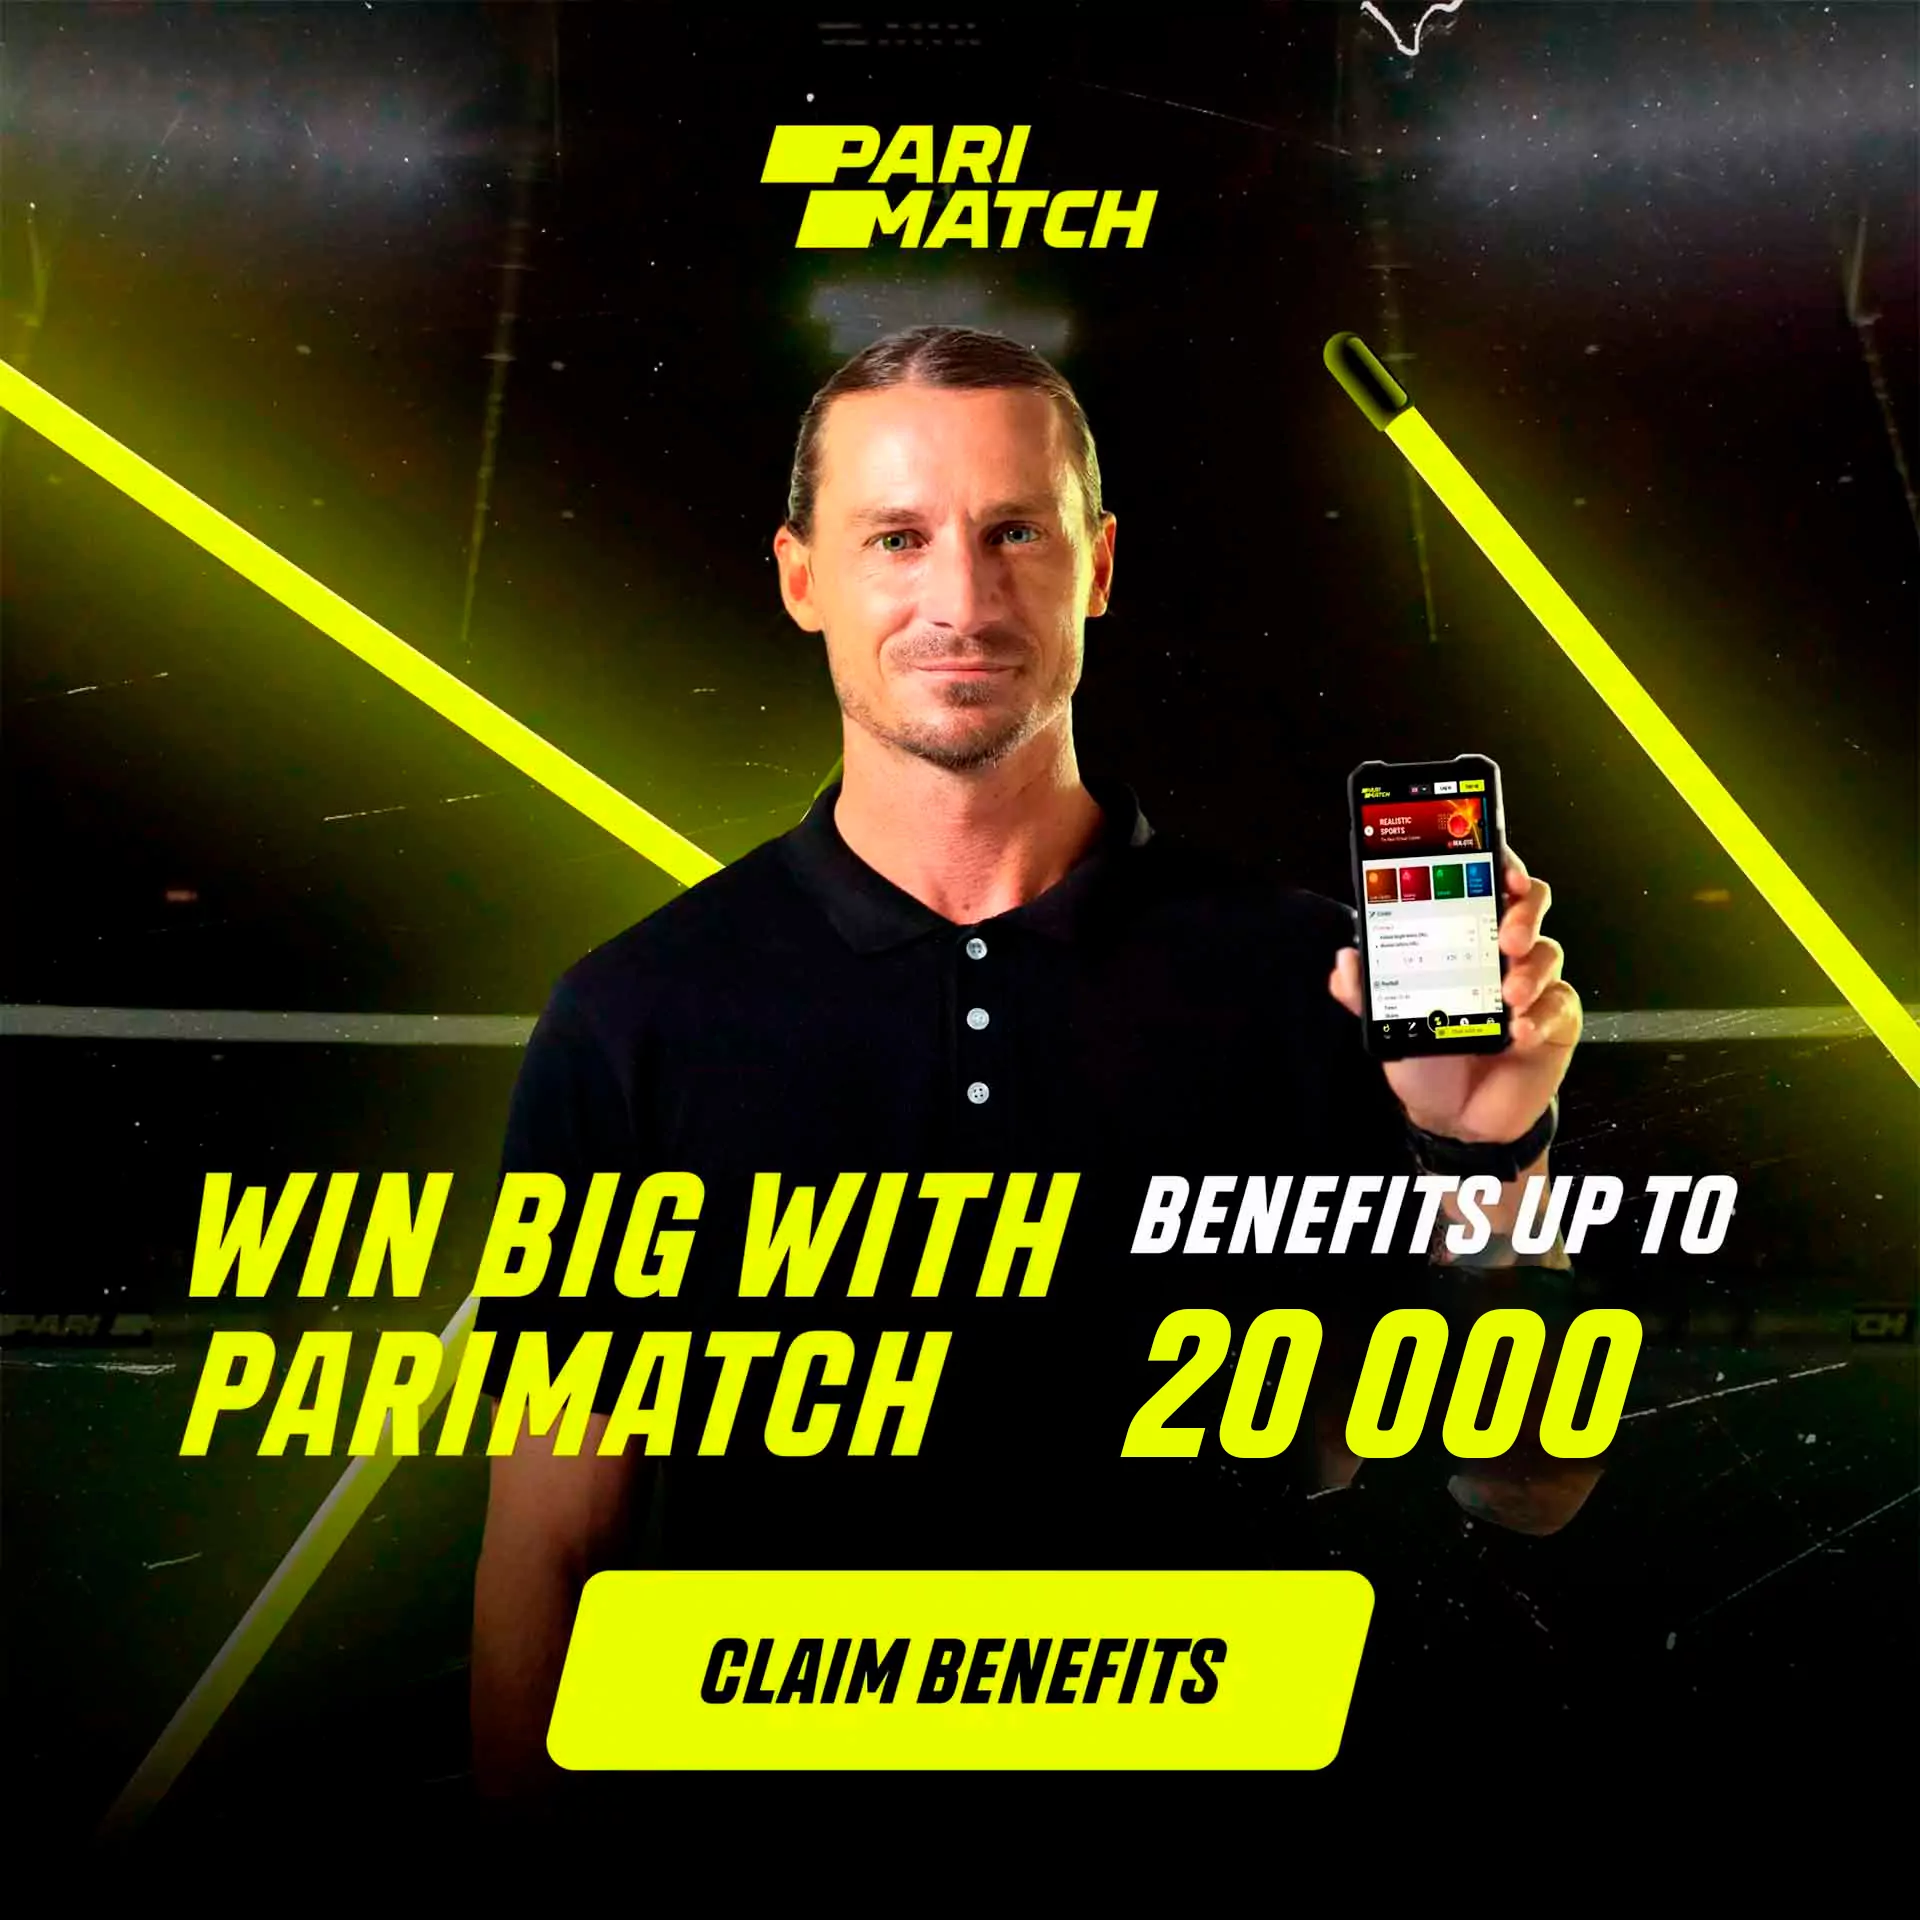 Parimatch offer exclusive bonus for cricket betting online.